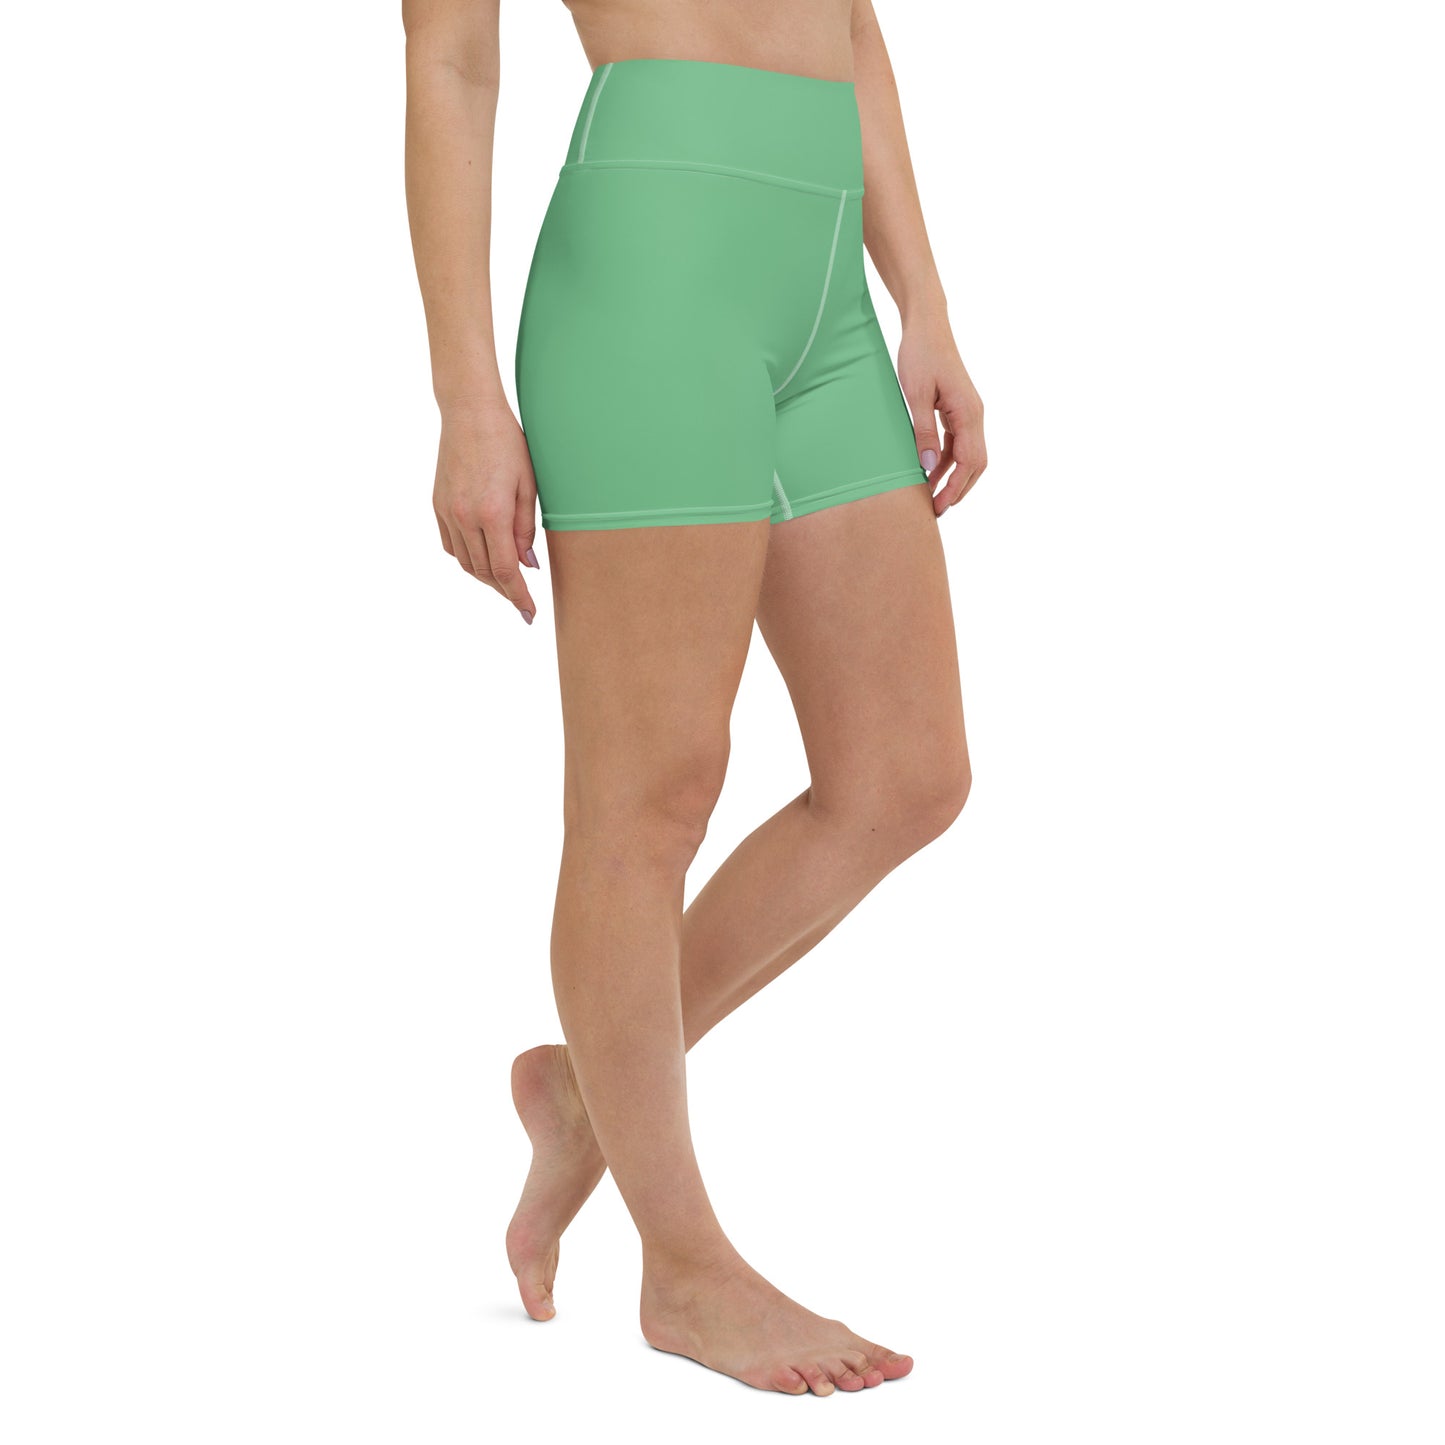 Marbella Solid Green High Waist Yoga Shorts / Bike Shorts with Inside Pocket